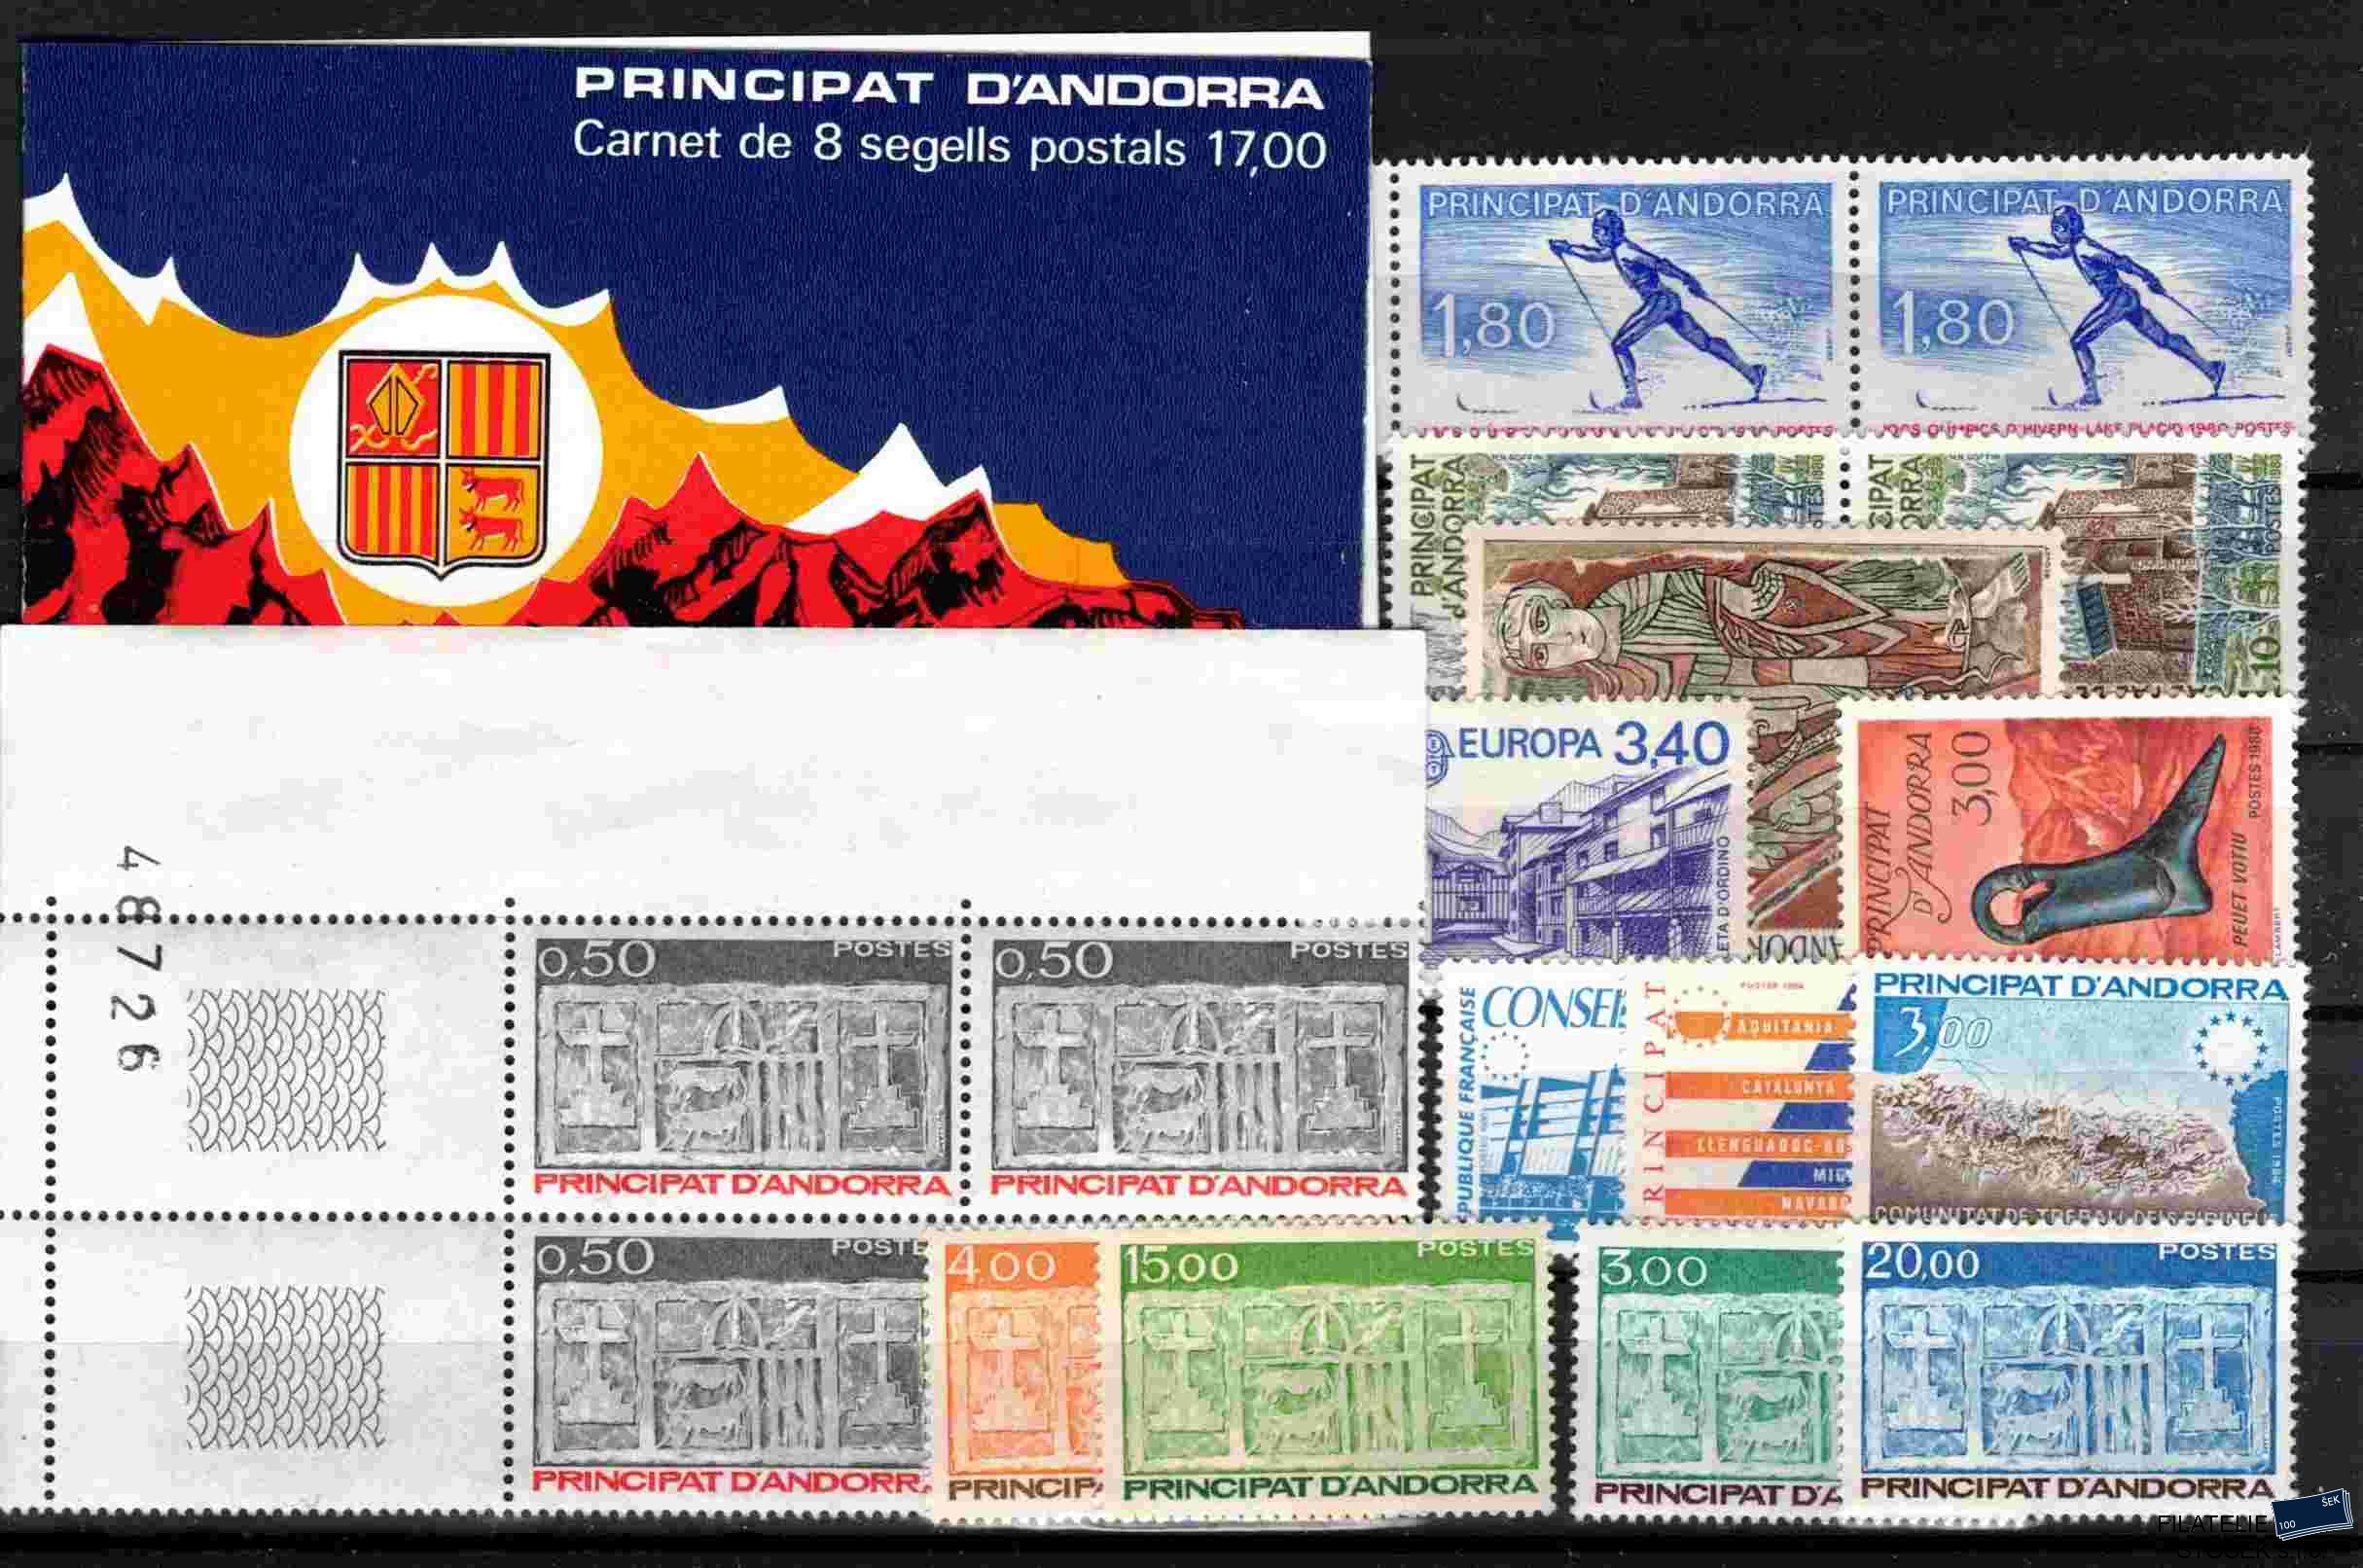 Fr. Andorra - sestava známek na kartičce A 5